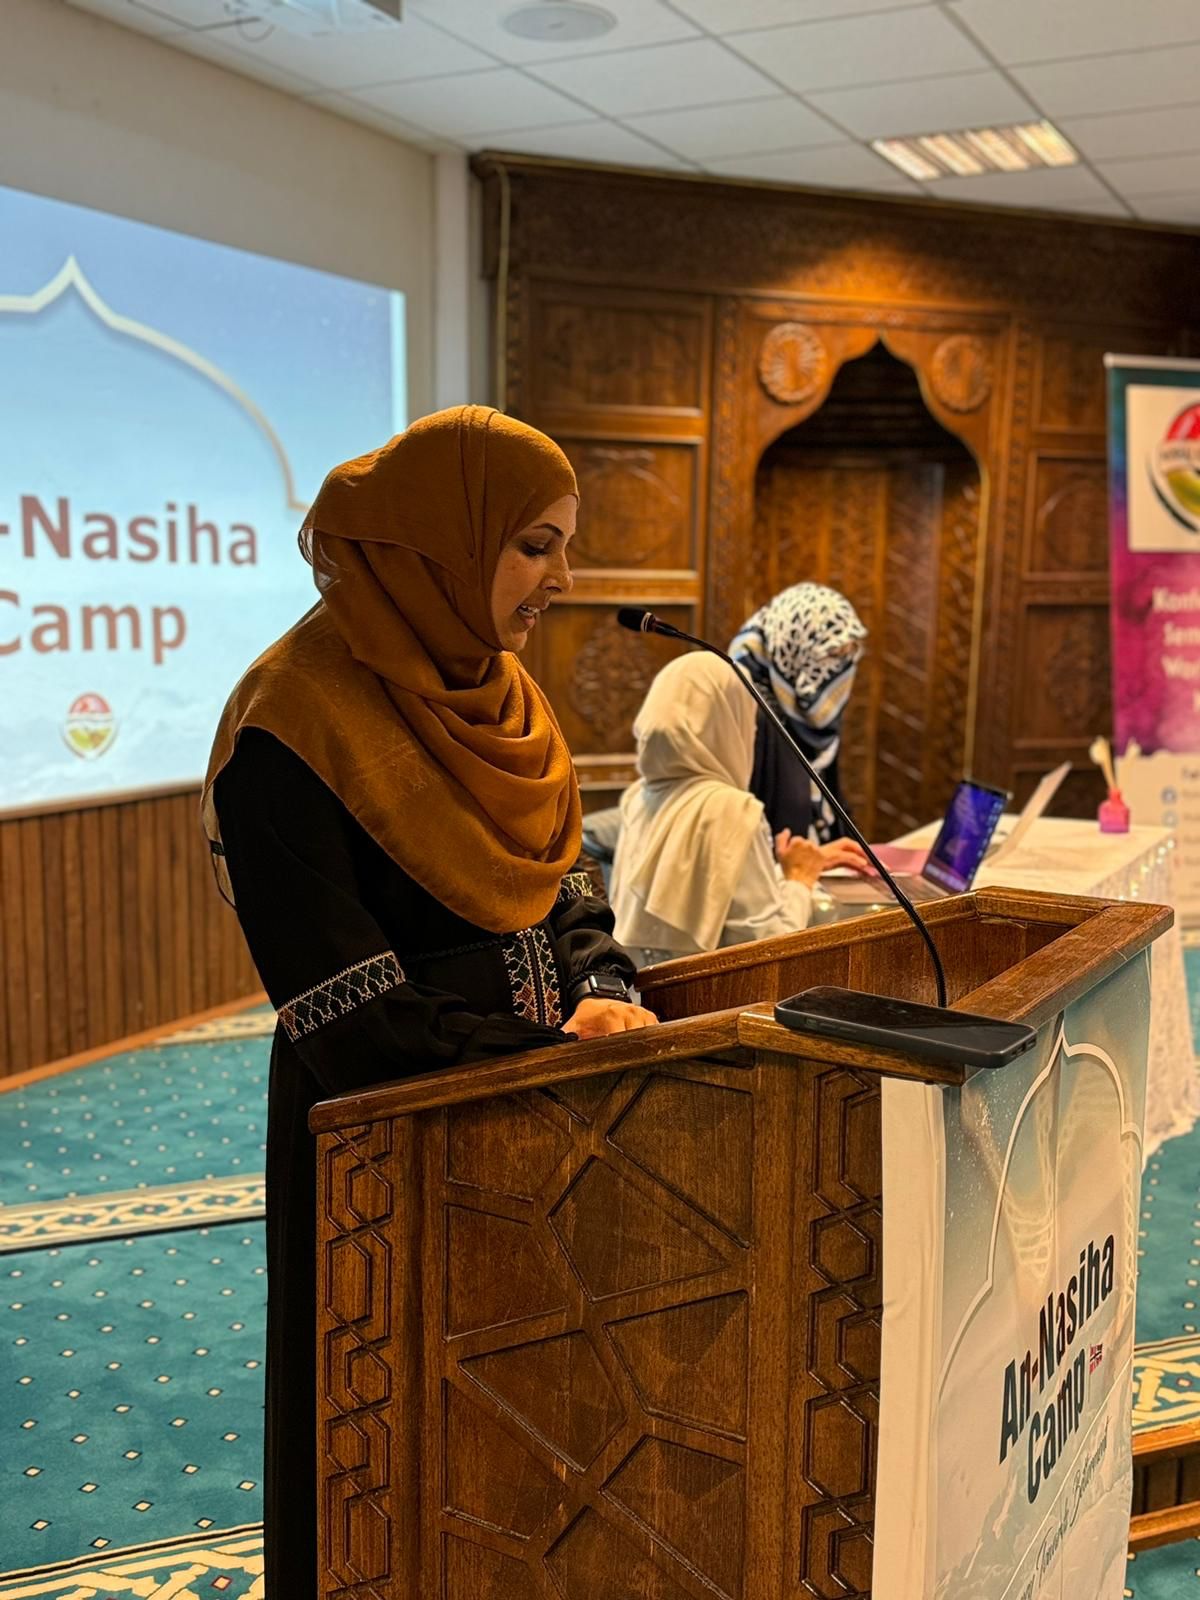 al-nasiha camp 2023 spirtual gathering